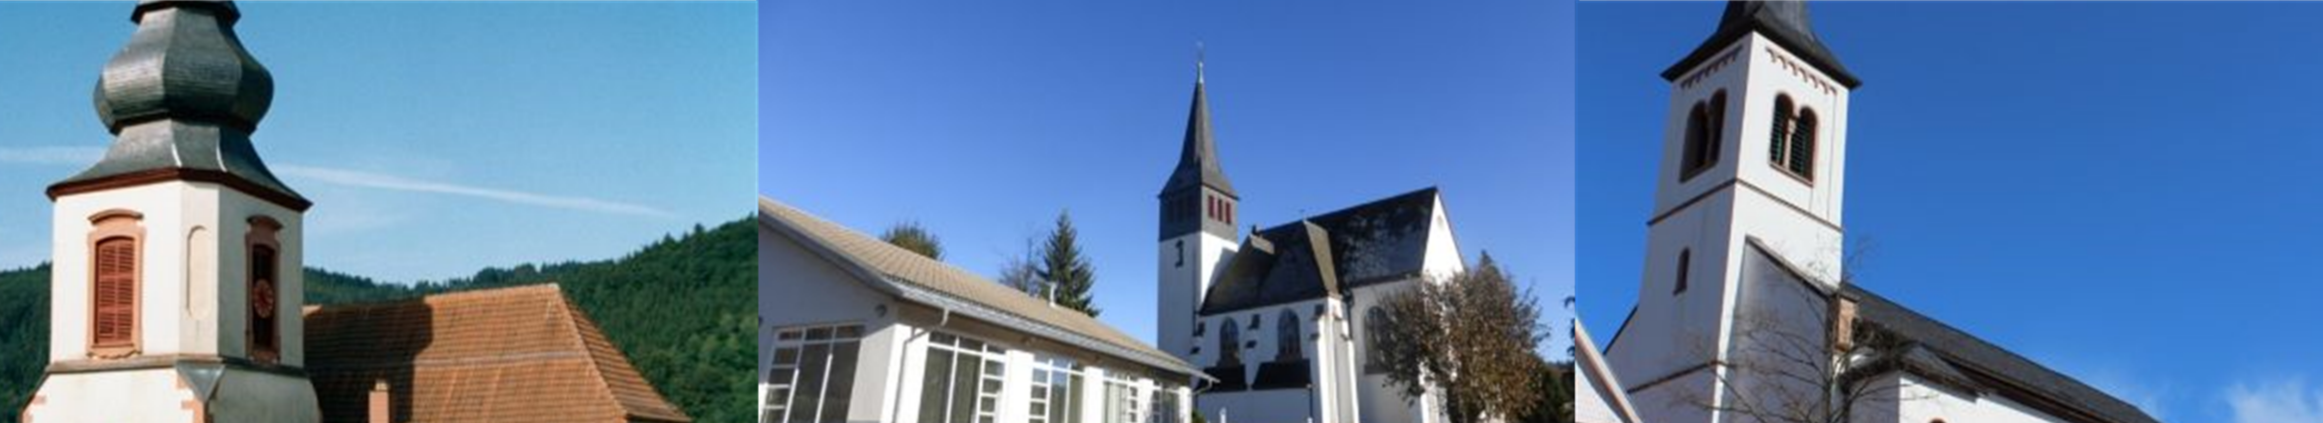 Slider 2 - Pastoralraum Ueberwald - Matthias Staat